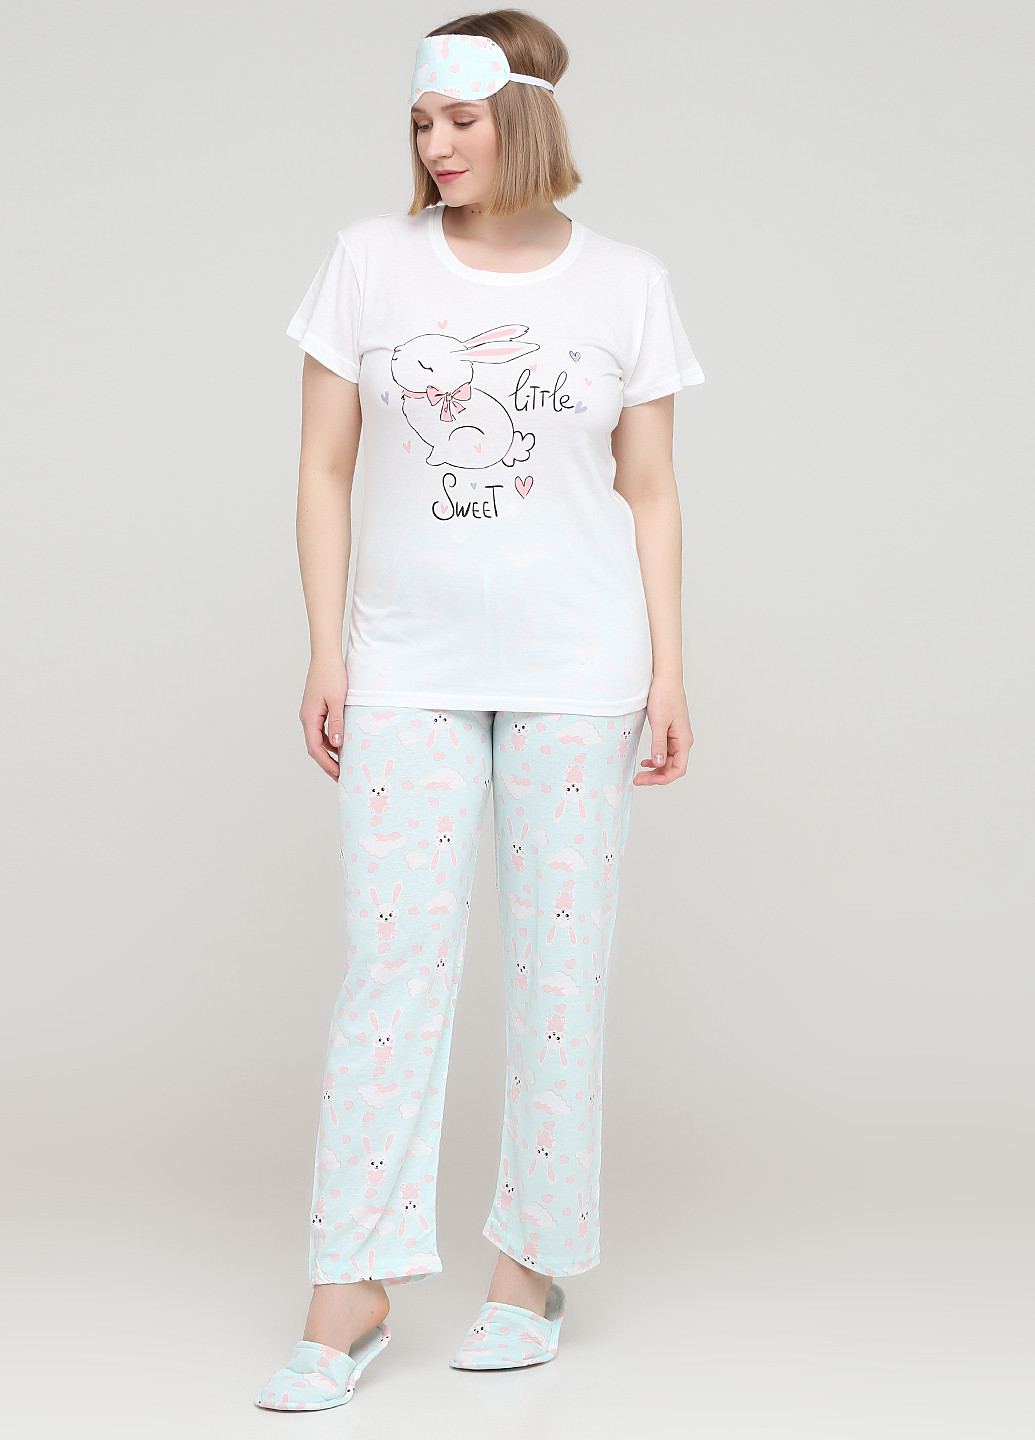 Светло-голубая всесезон пижама (футболка, брюки, маска для сна, тапочки) футболка + брюки Mirano